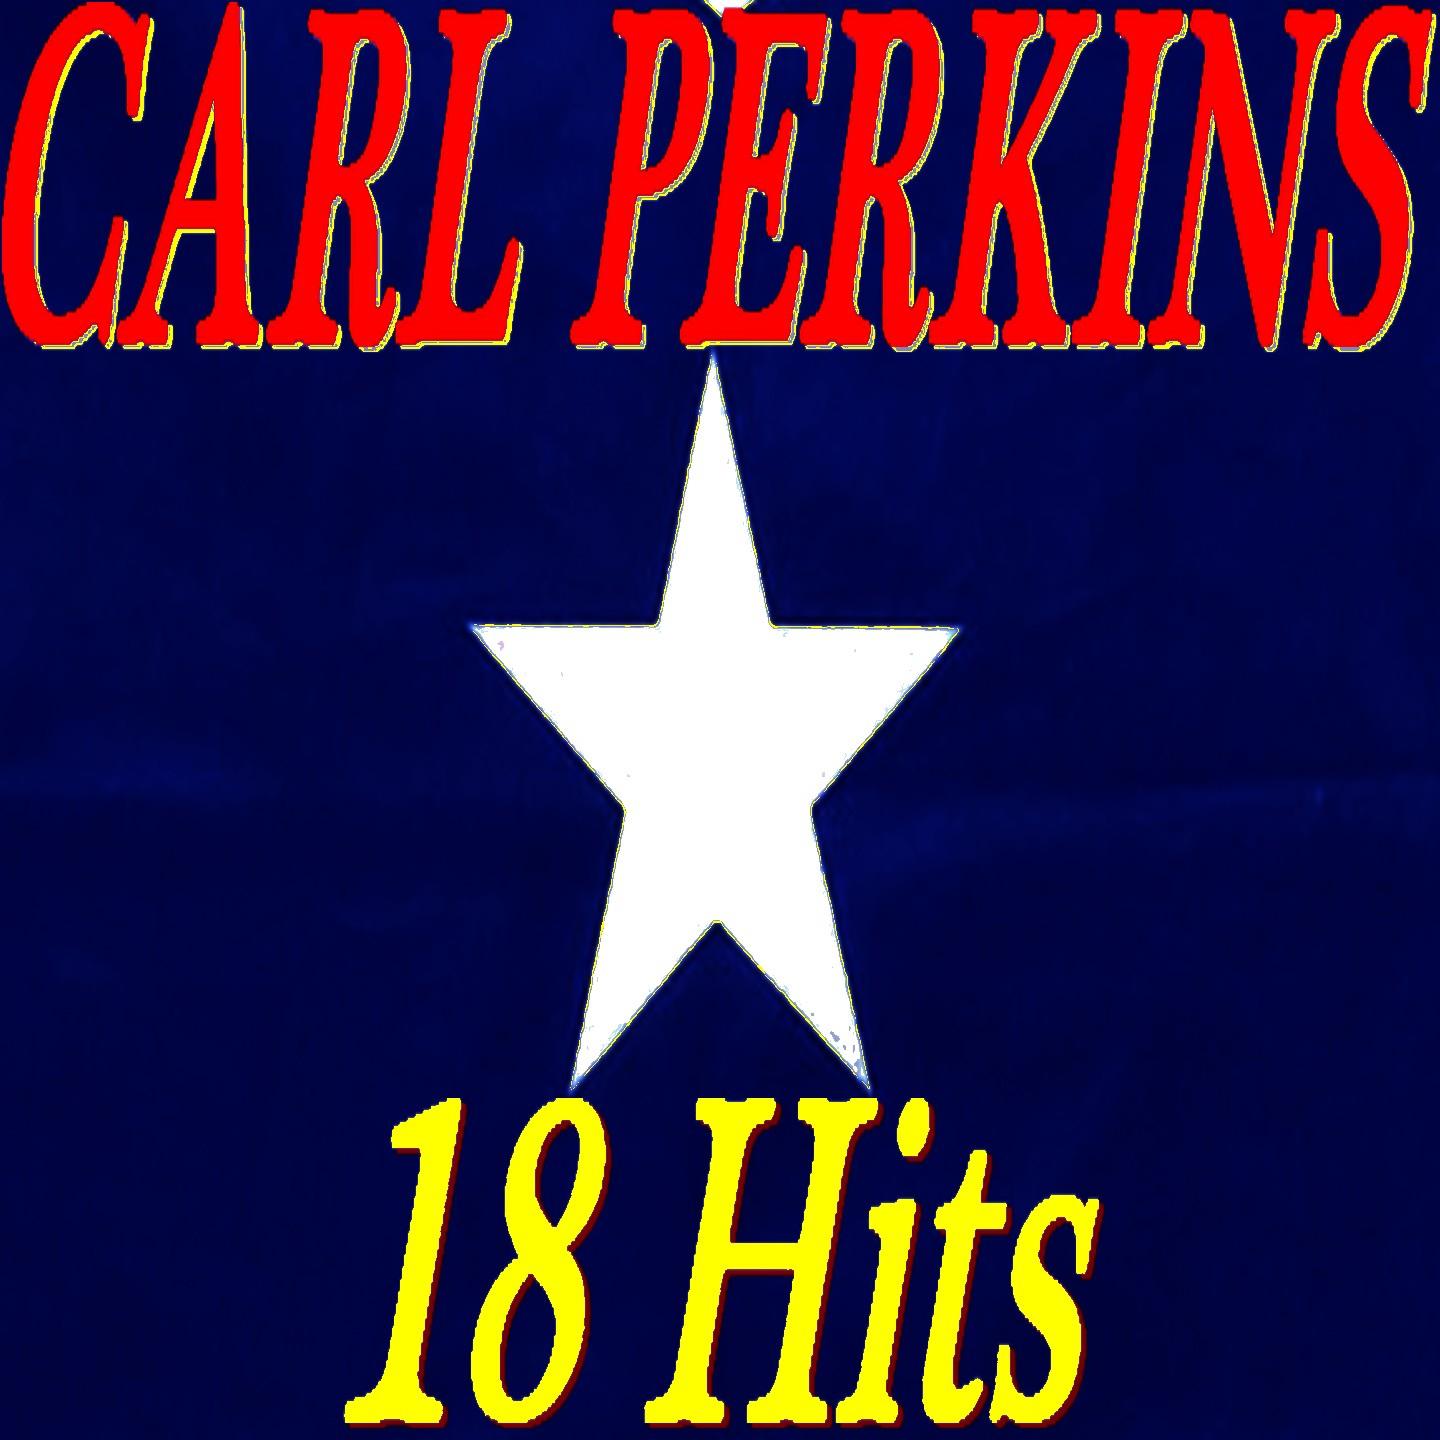 Carl Perkins (18 Hits)